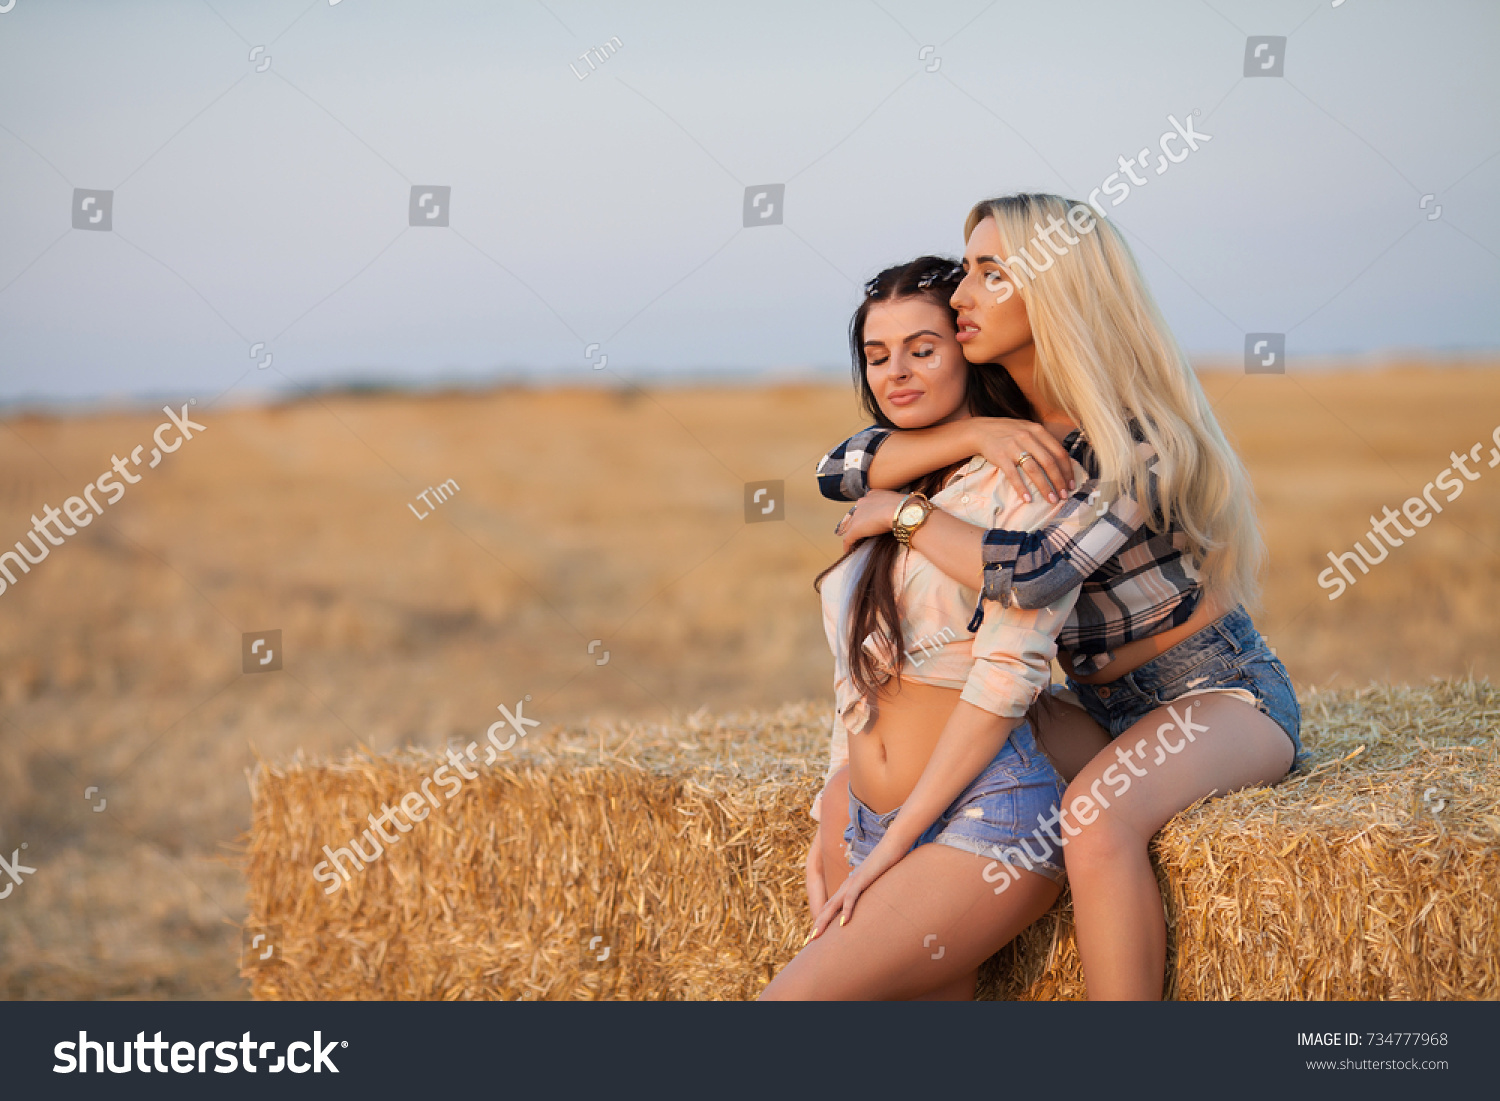 Hot Sexy Lesbian Teens